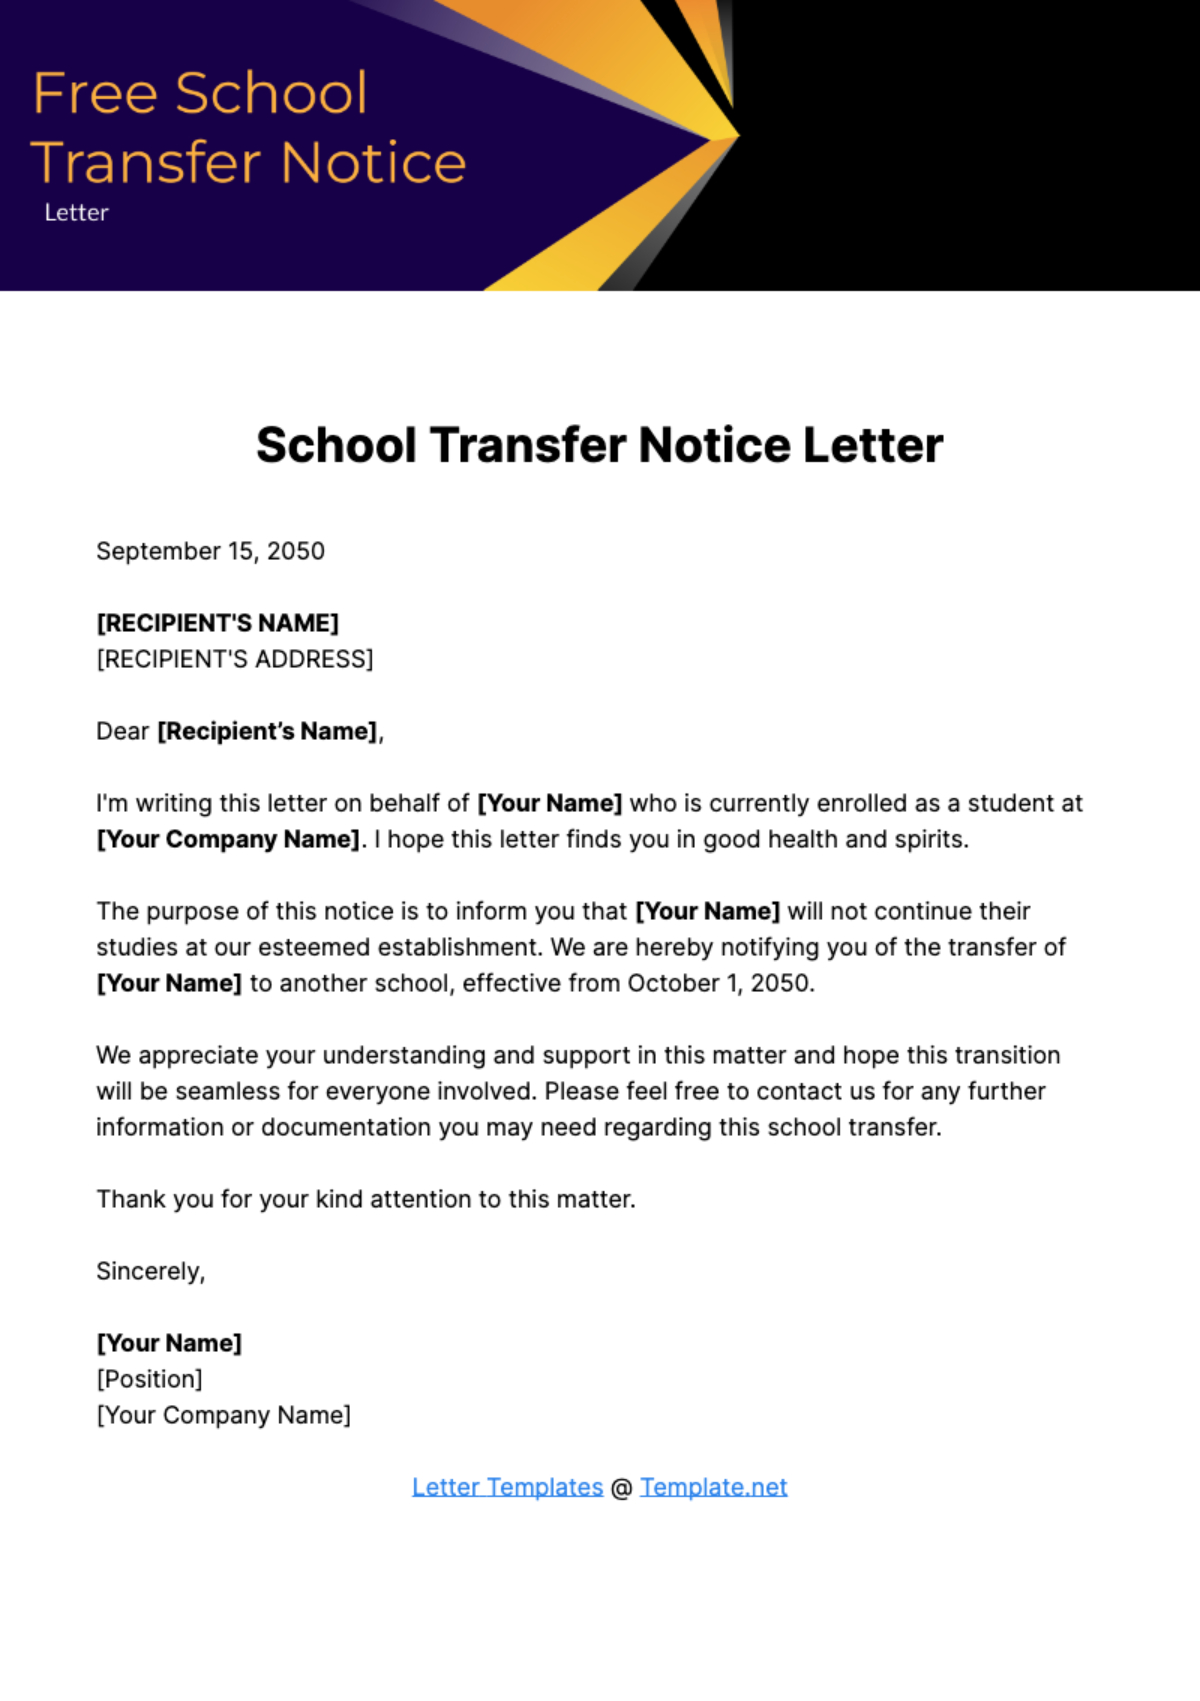 Free School Transfer Notice Letter Template